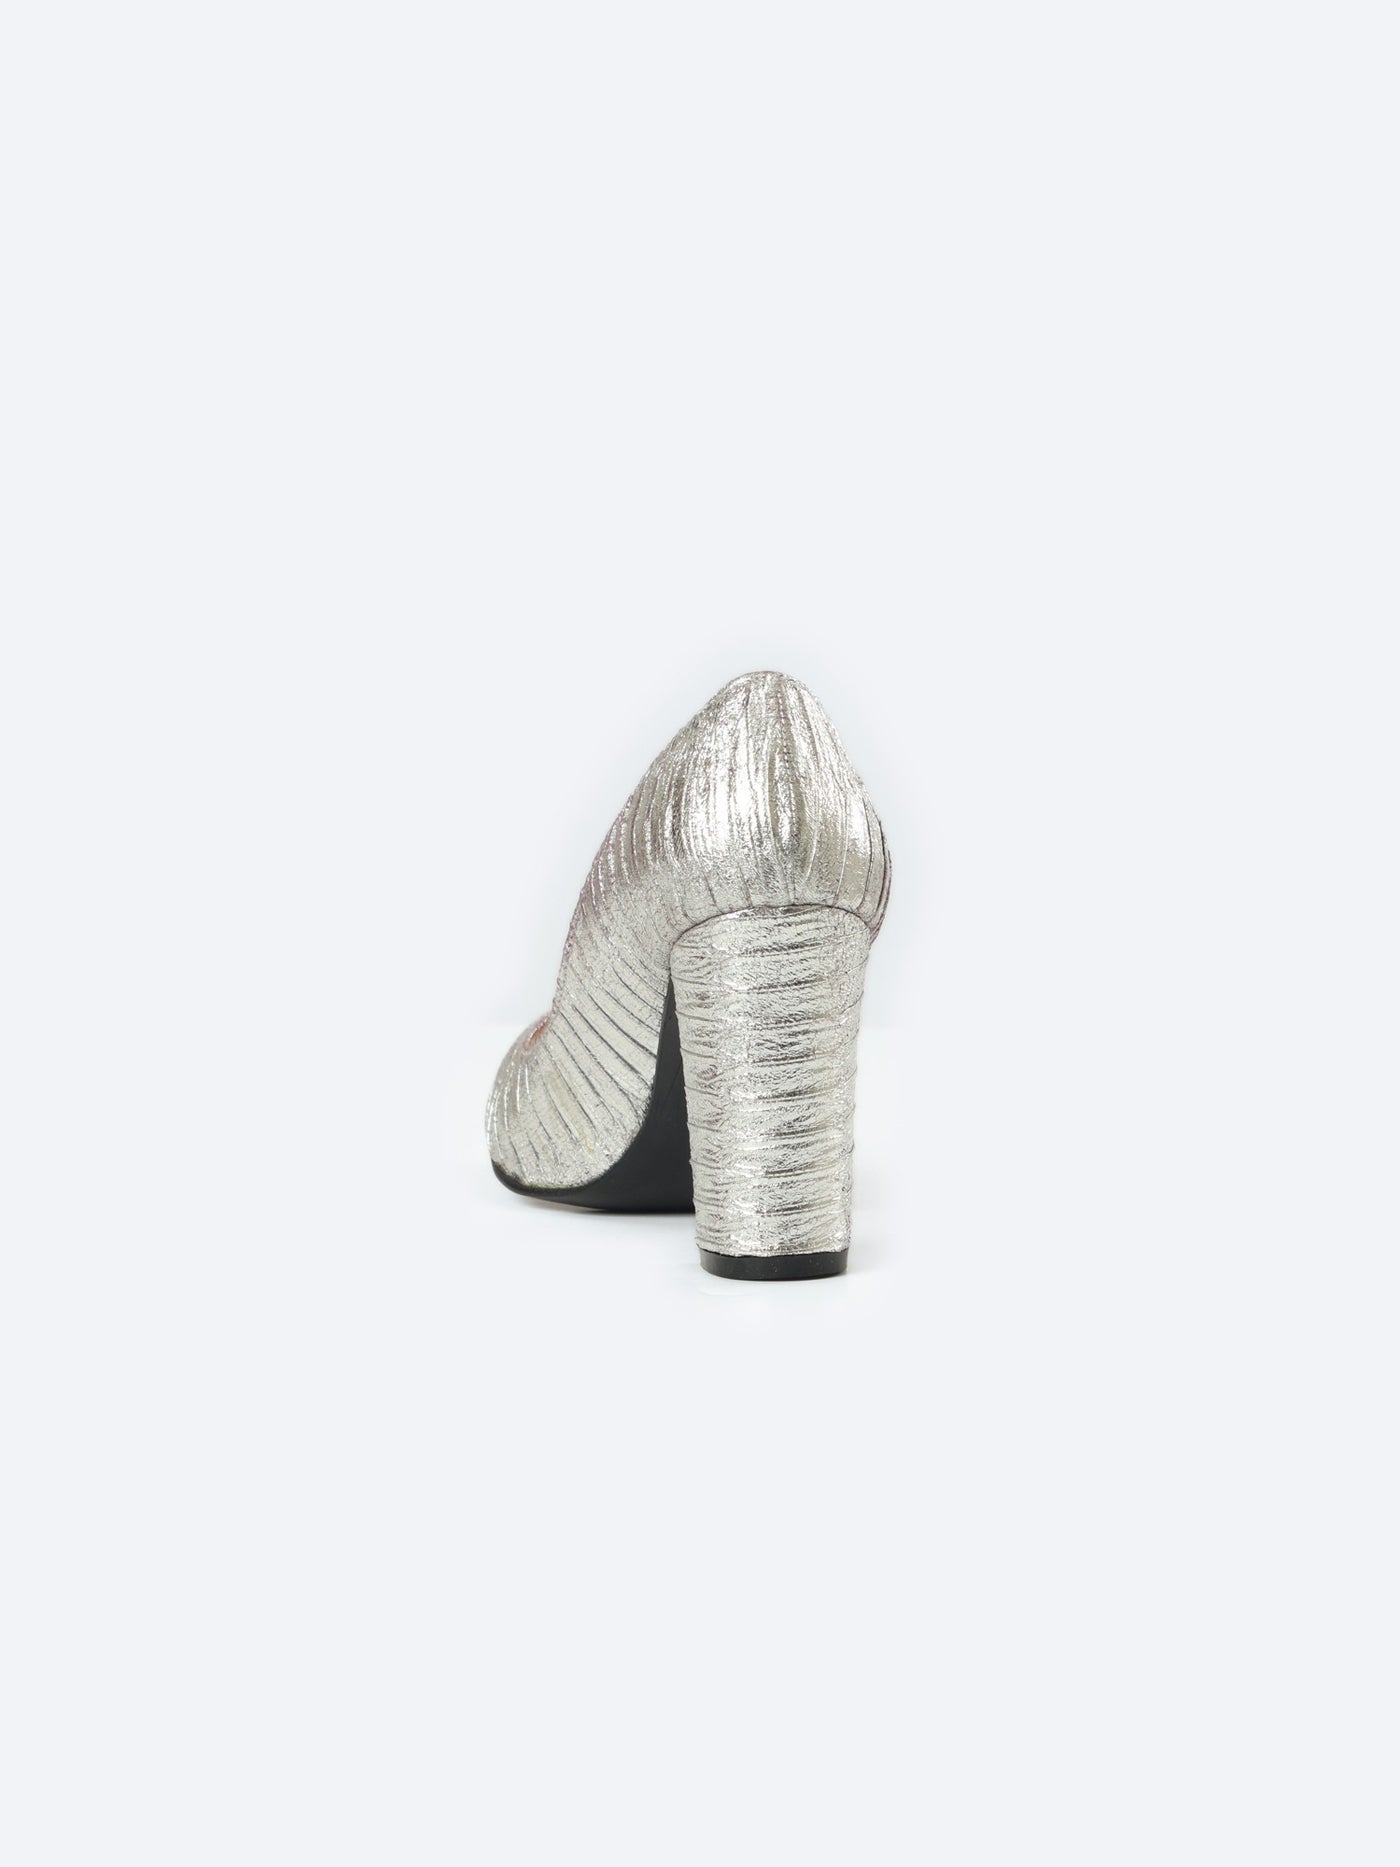 Heels - Textured - Shiny